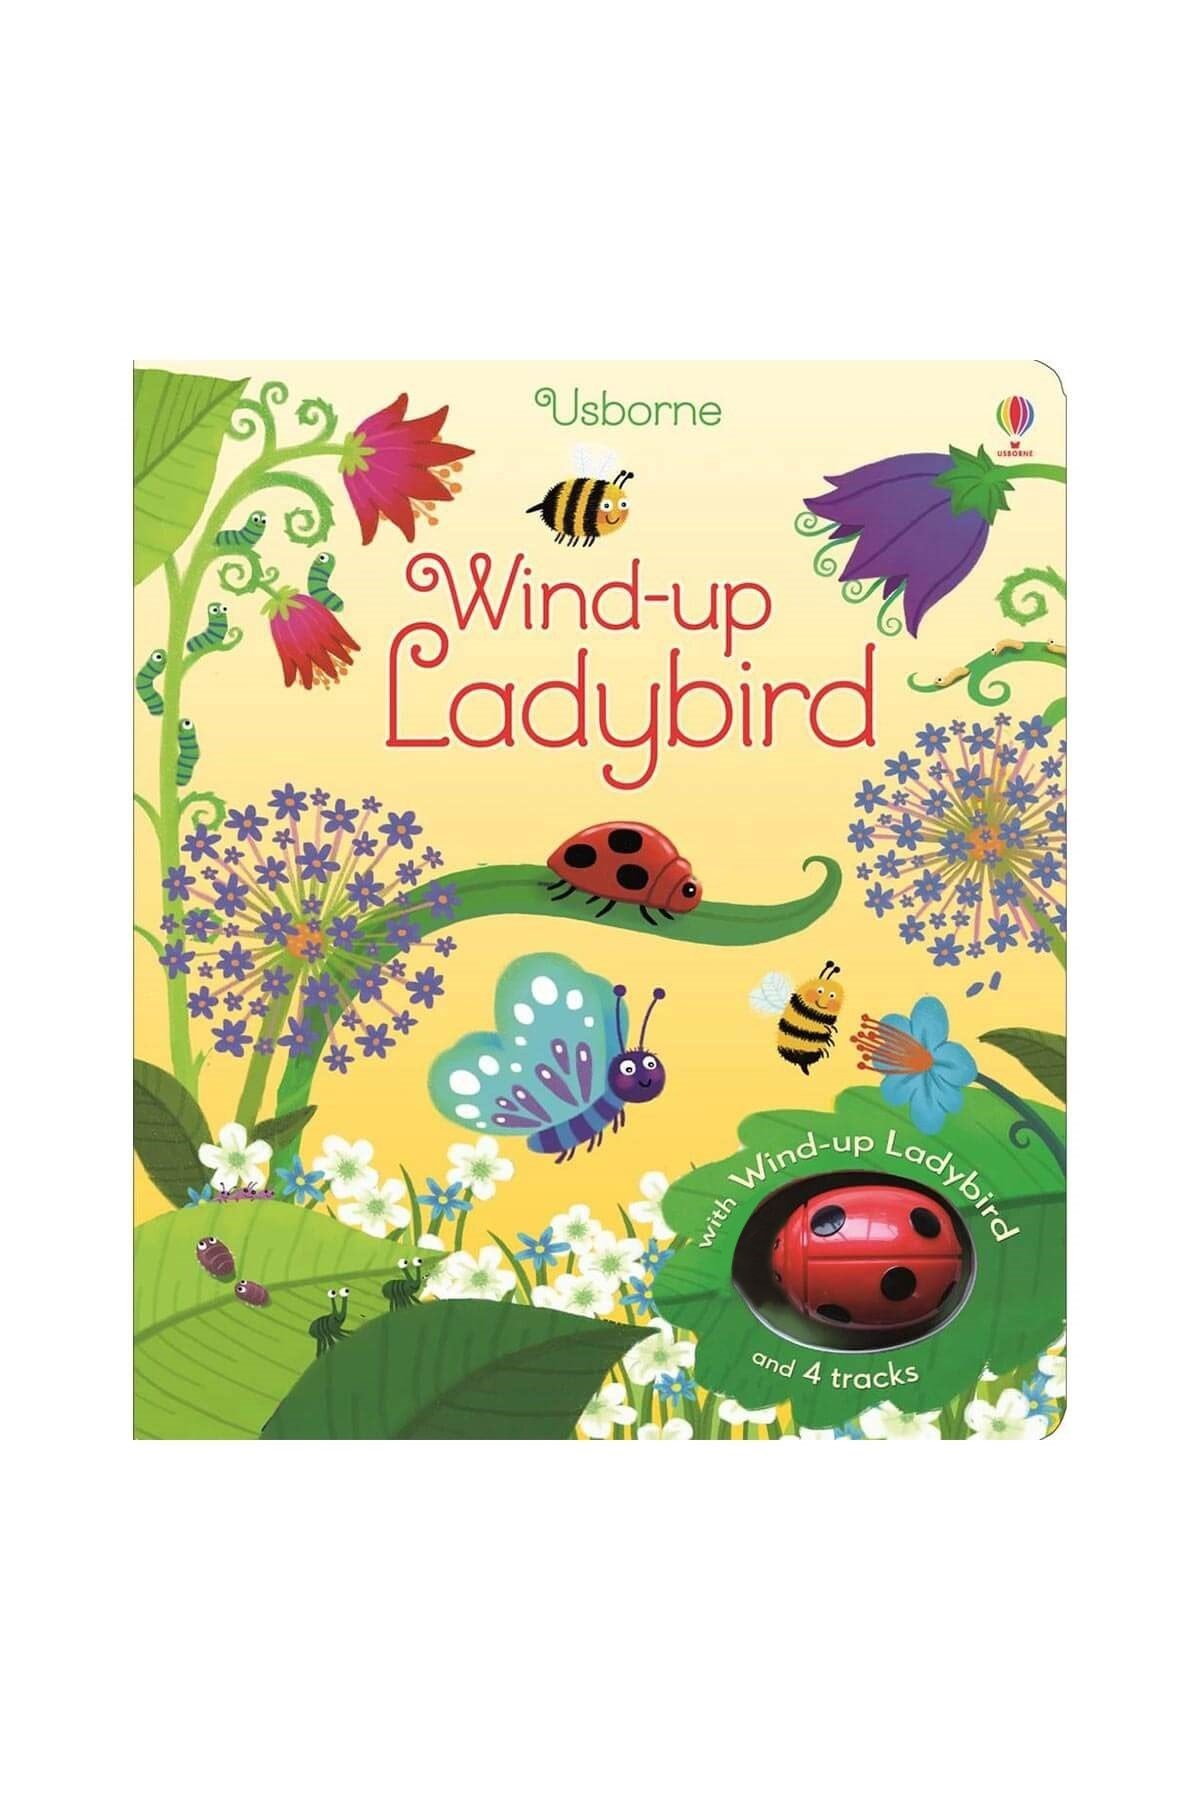 The Usborne Wind-Up Ladybird